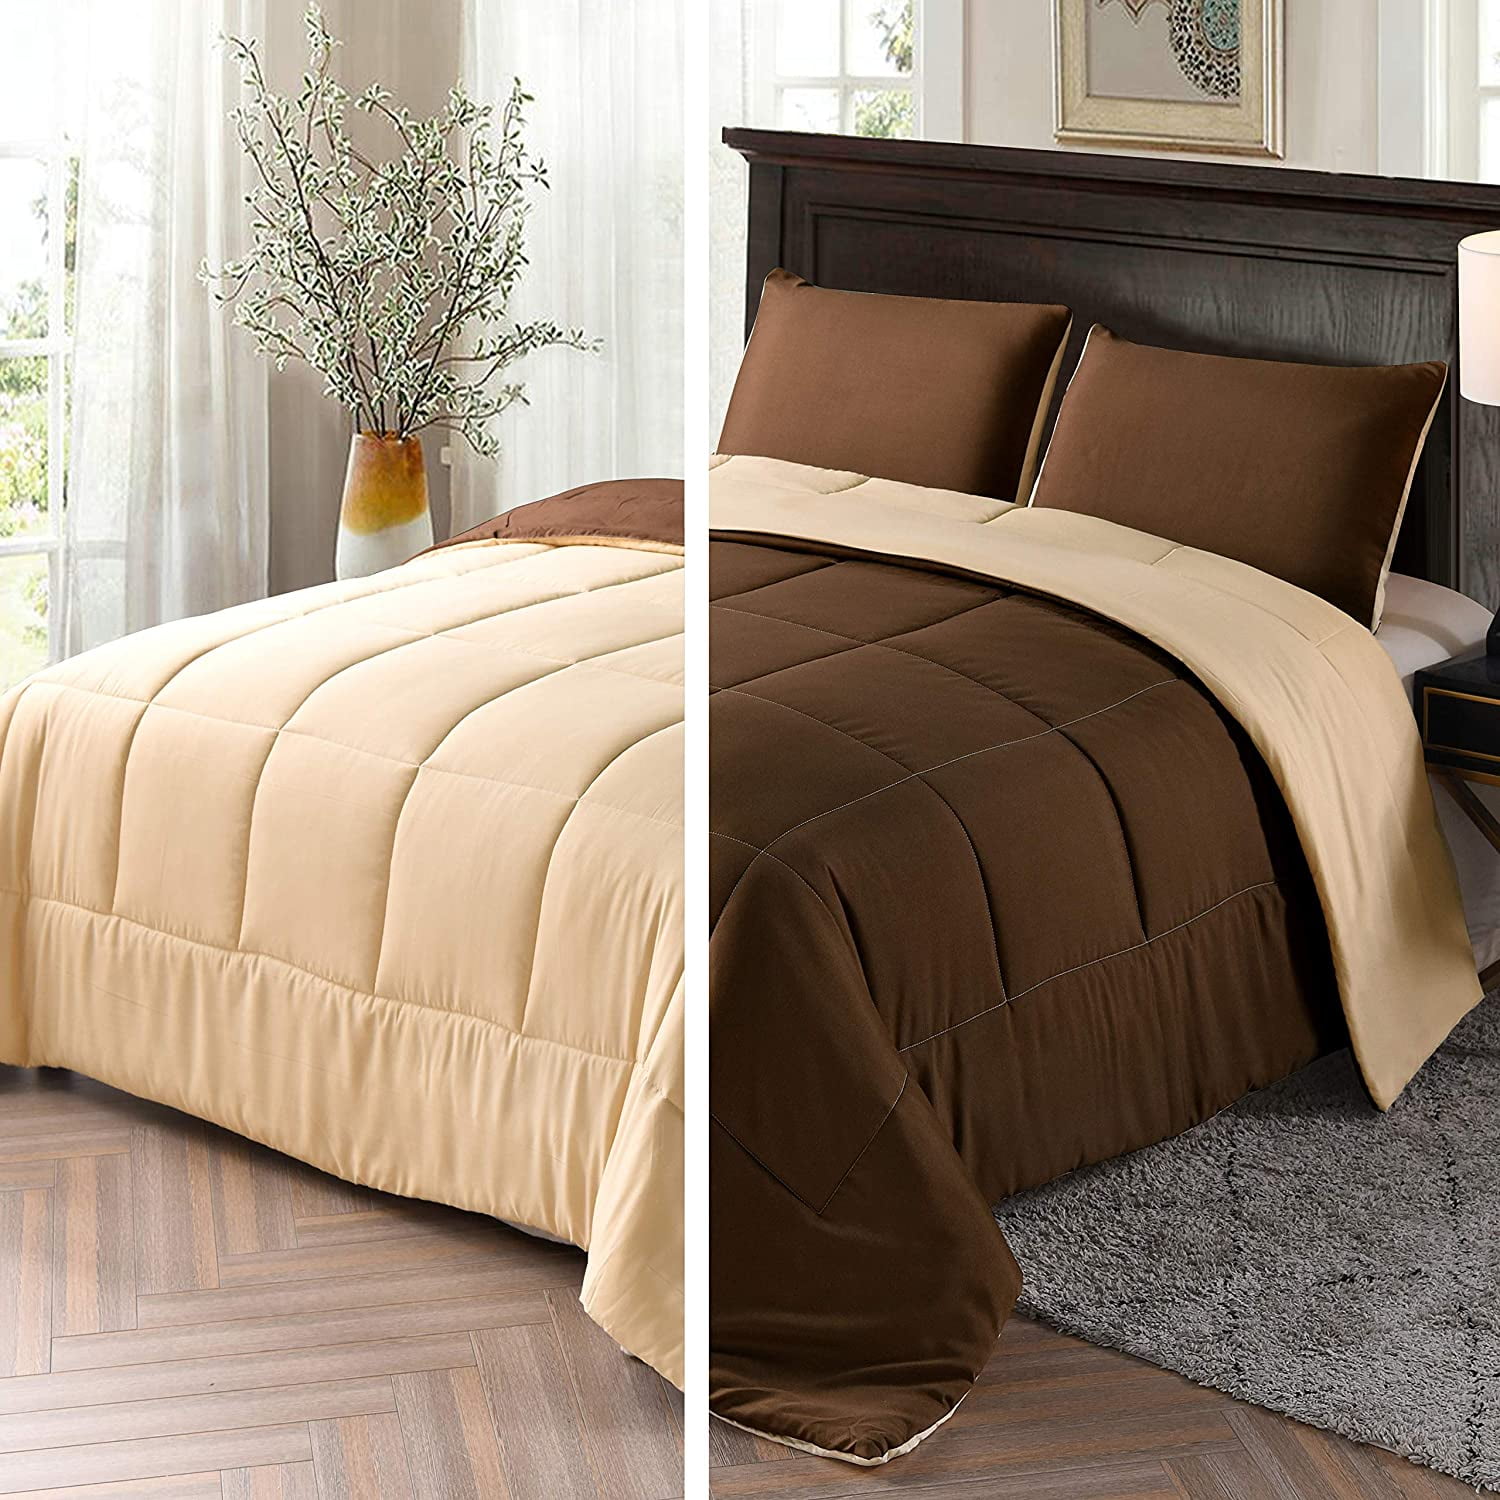 Exclusivo Mezcla Lightweight Reversible 3-Piece Comforter Set for All Seasons, Down Alternative Comforter with 2 Pillow Shams, Queen Size, Brown/Khaki